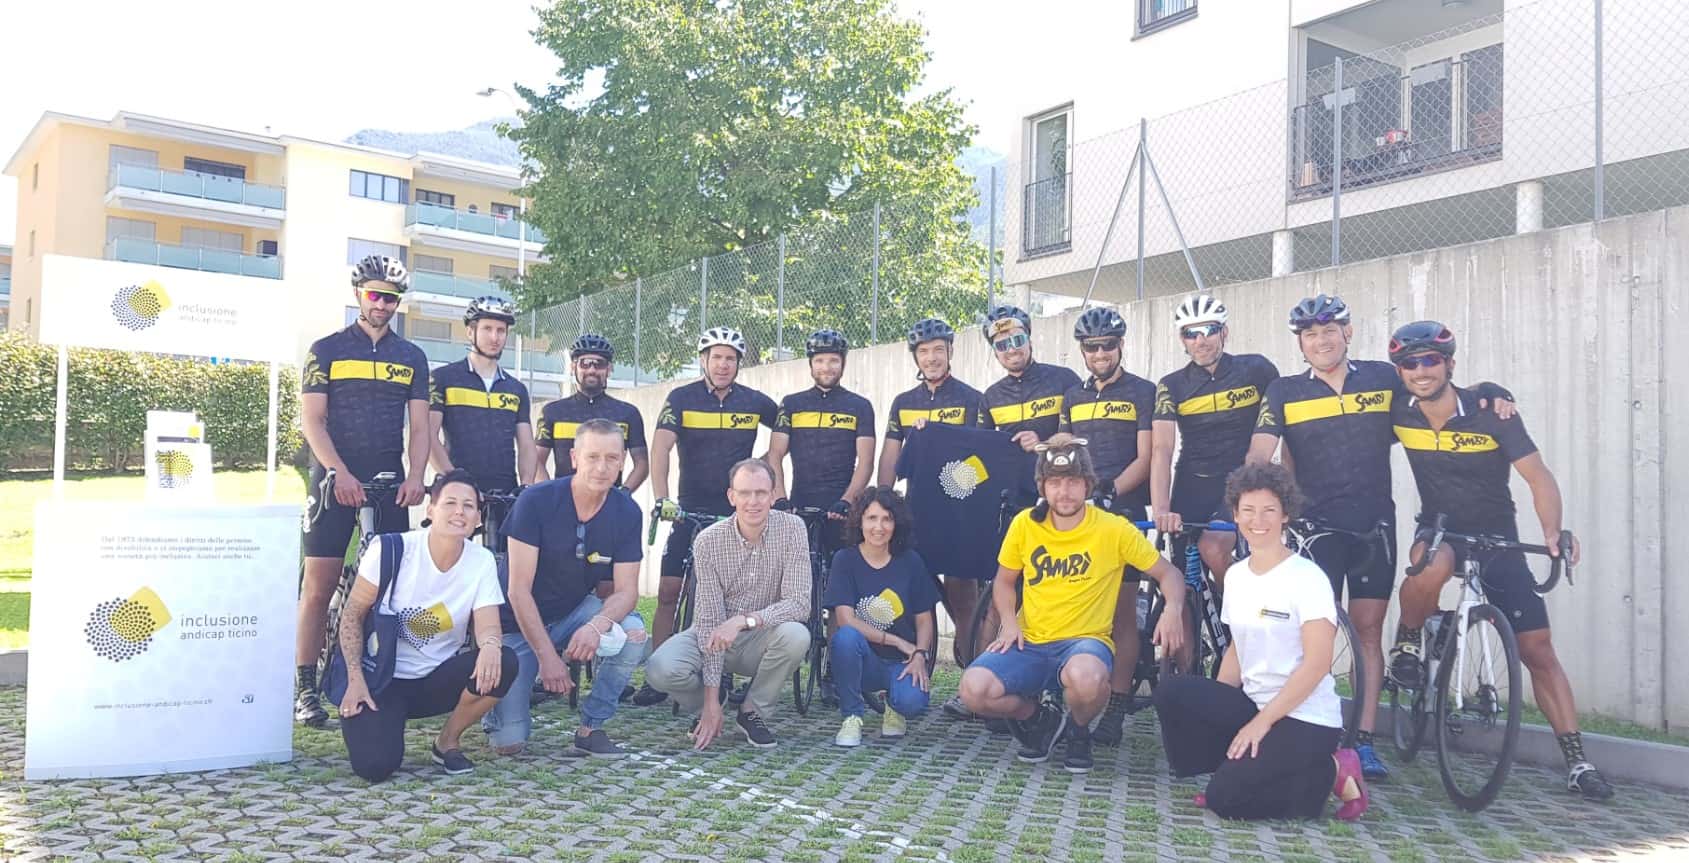 Team Sambì Bike  e inclusione andicap ticino